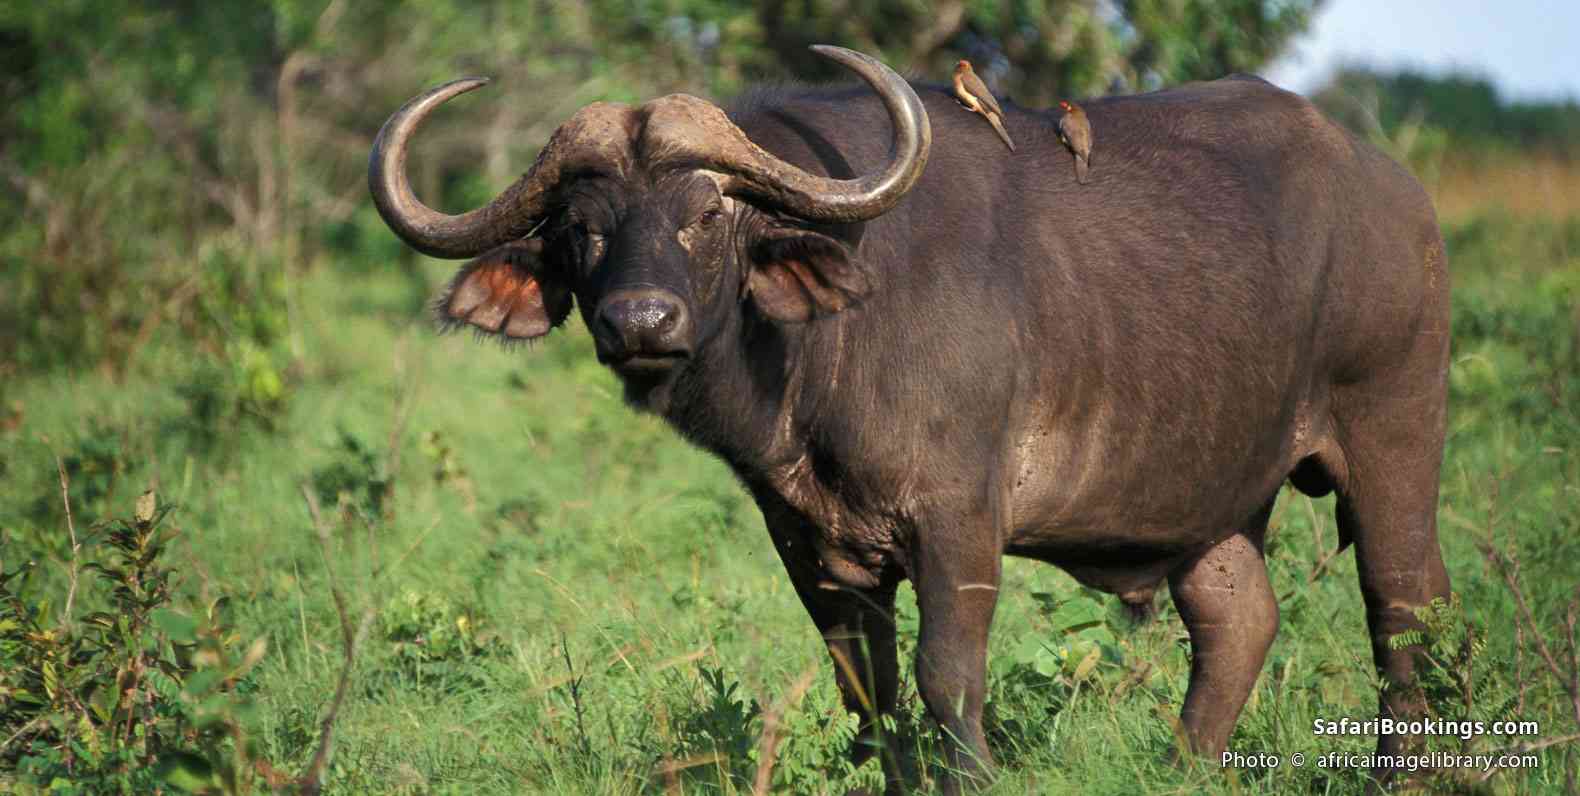 Buffalo with birds on its back, Shimba Hills National Reserve